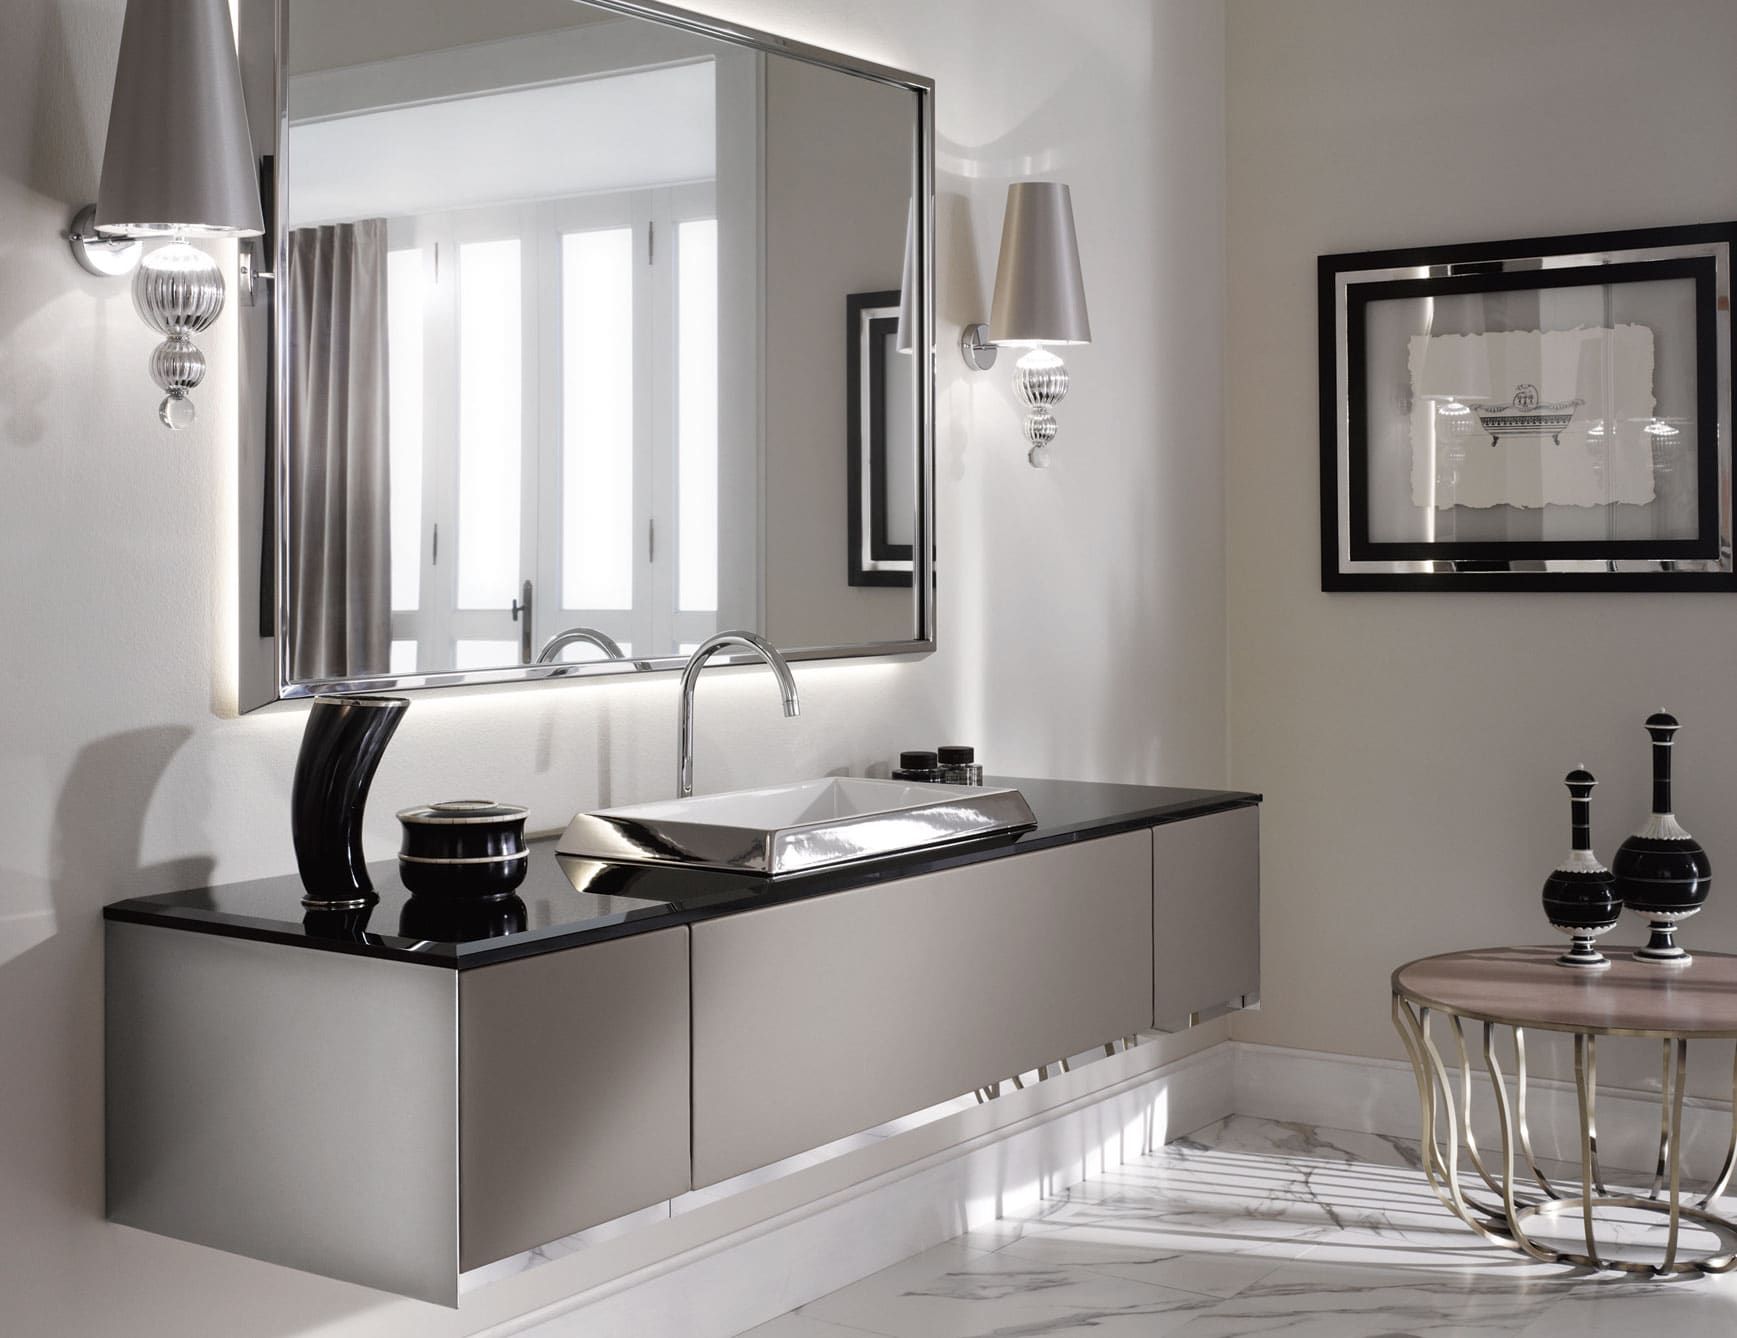 Four Seasons modern Italian bathroom vanity with beige lacquered wood